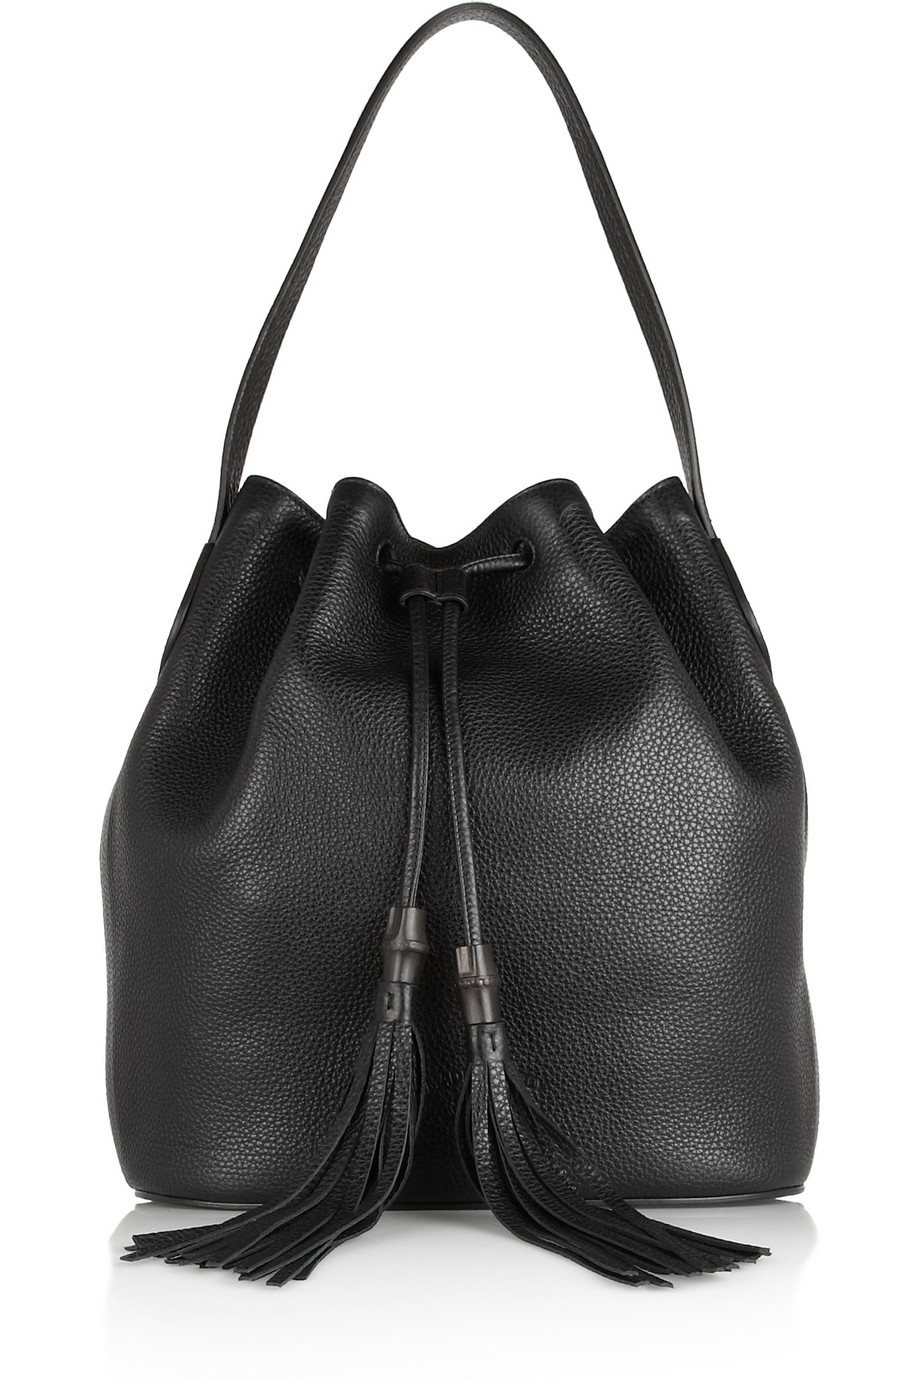 Gucci Lady Tassel Textured-leather Bucket Bag in Black | Lyst